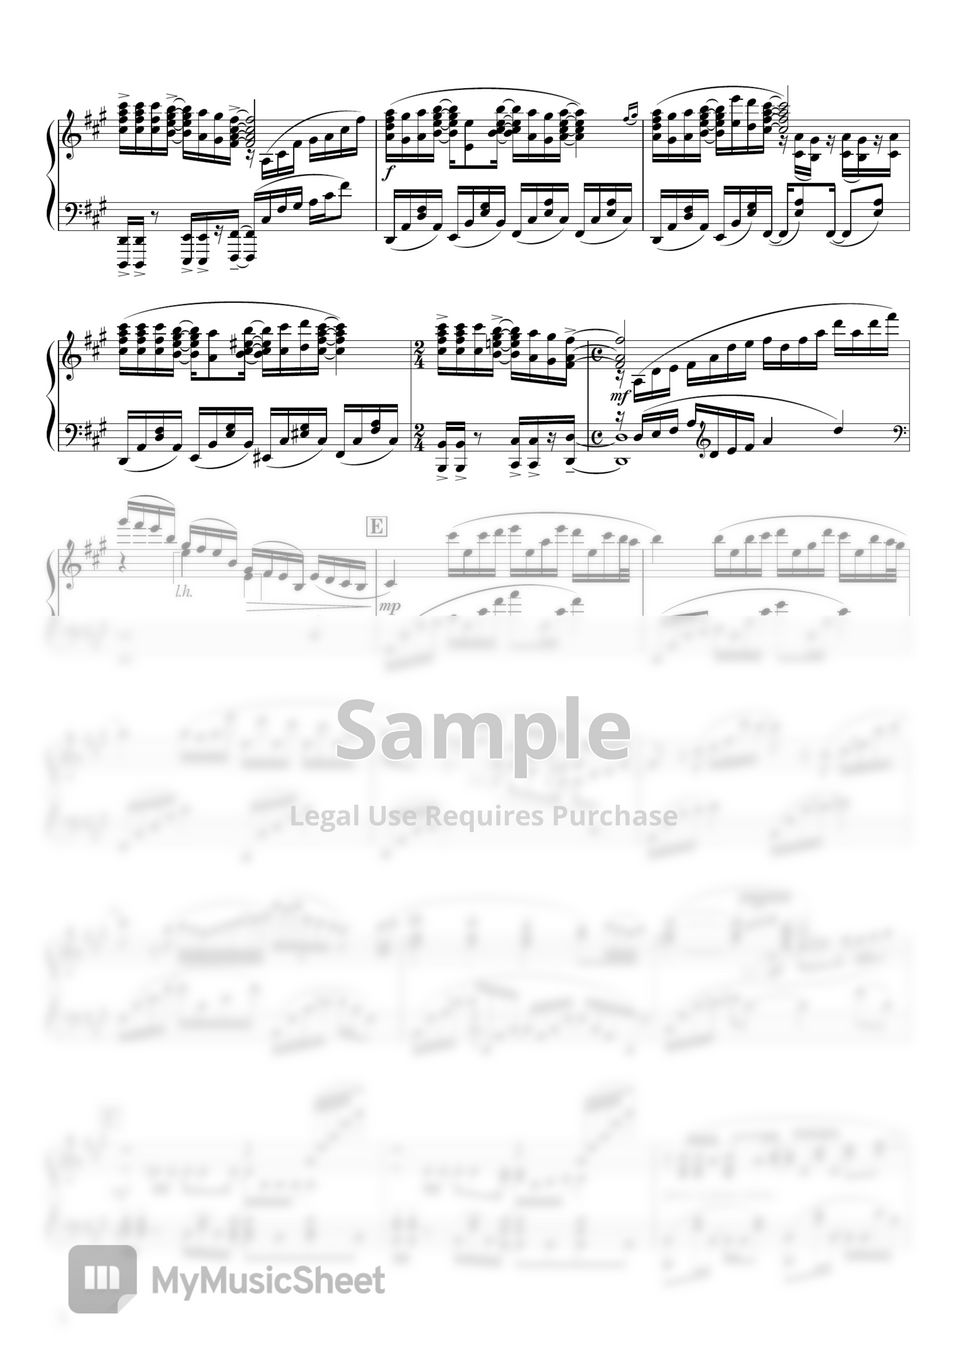 Hikaru nara – Goose house Hikaru Nara melody Sheet music for Trumpet other  (Solo)